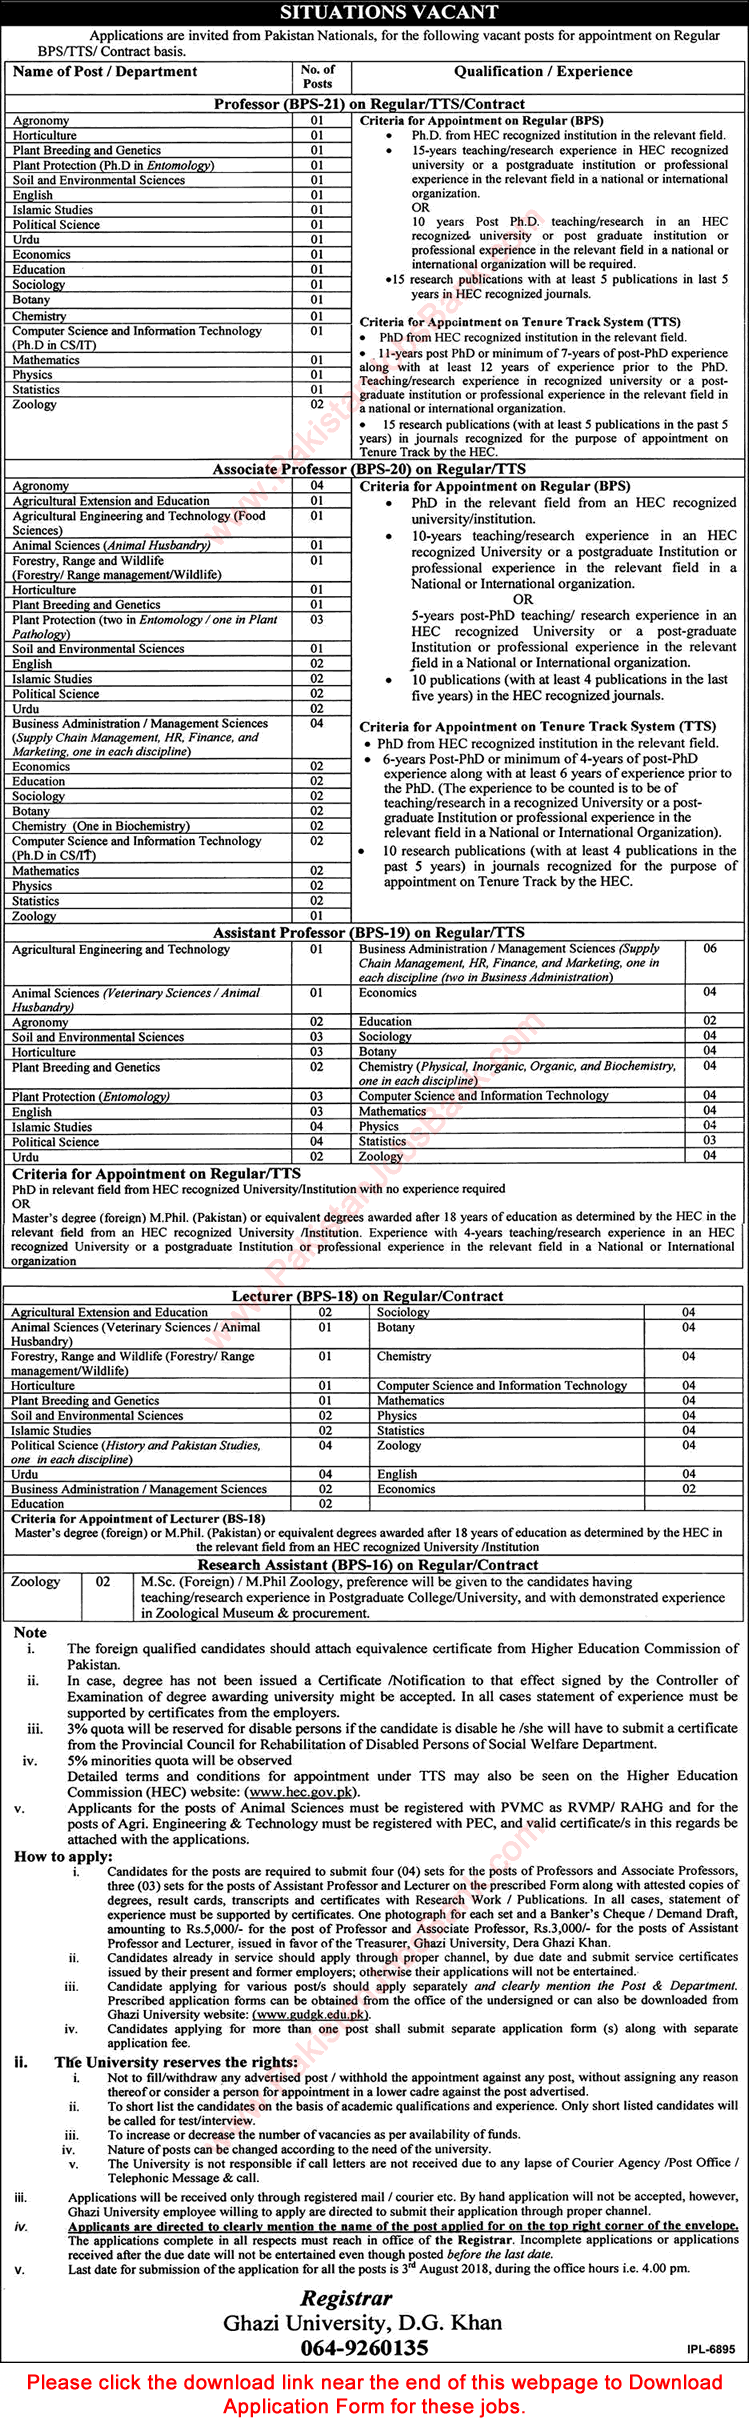 Ghazi University Dera Ghazi Khan Jobs 2018 July Application Form Teaching Faculty & Research Assistant Latest